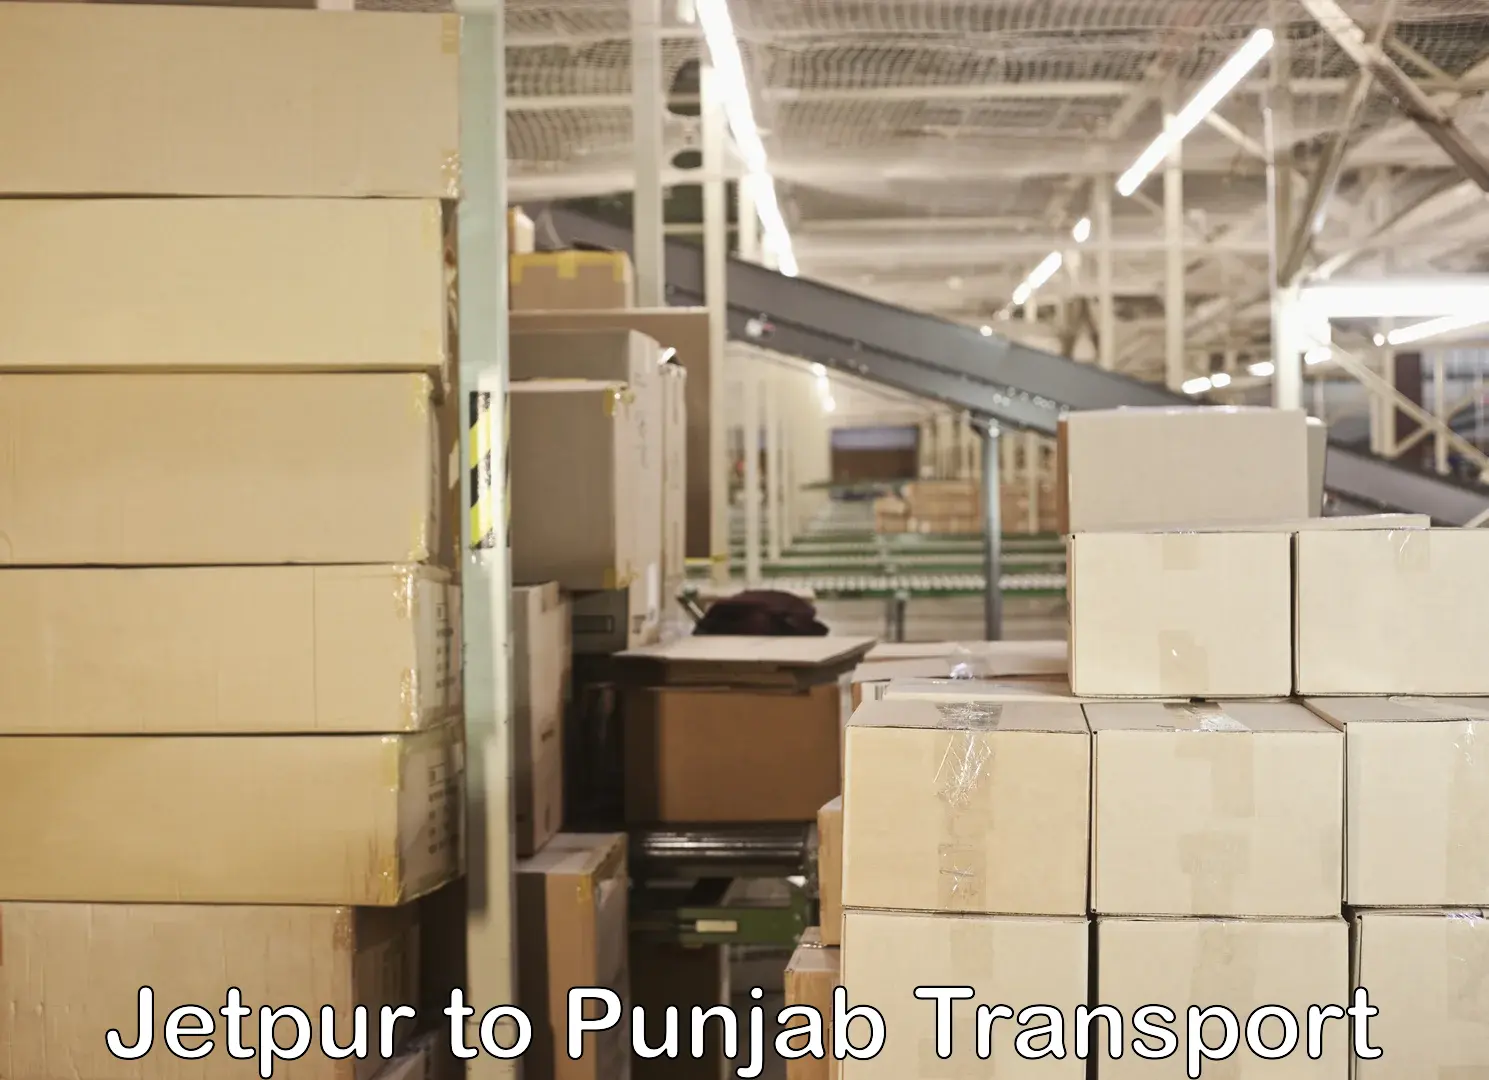 Lorry transport service Jetpur to Punjab